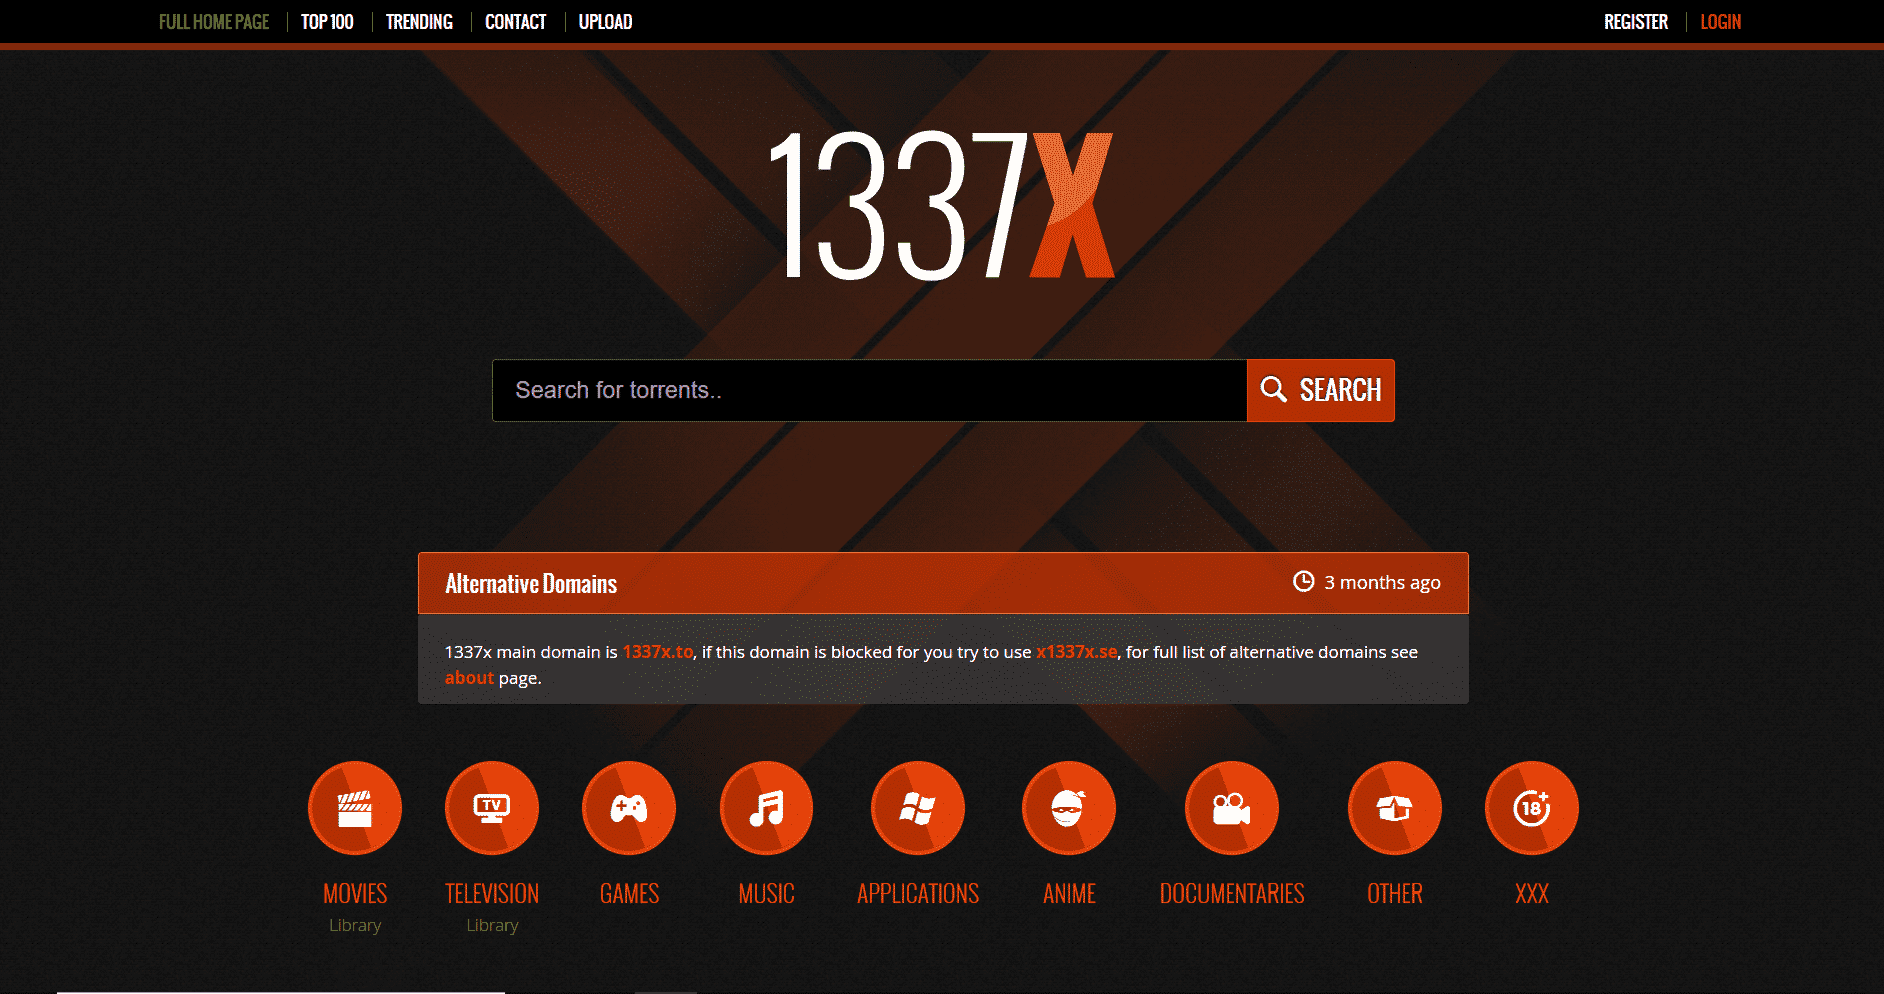 1337x - Best torrent sites